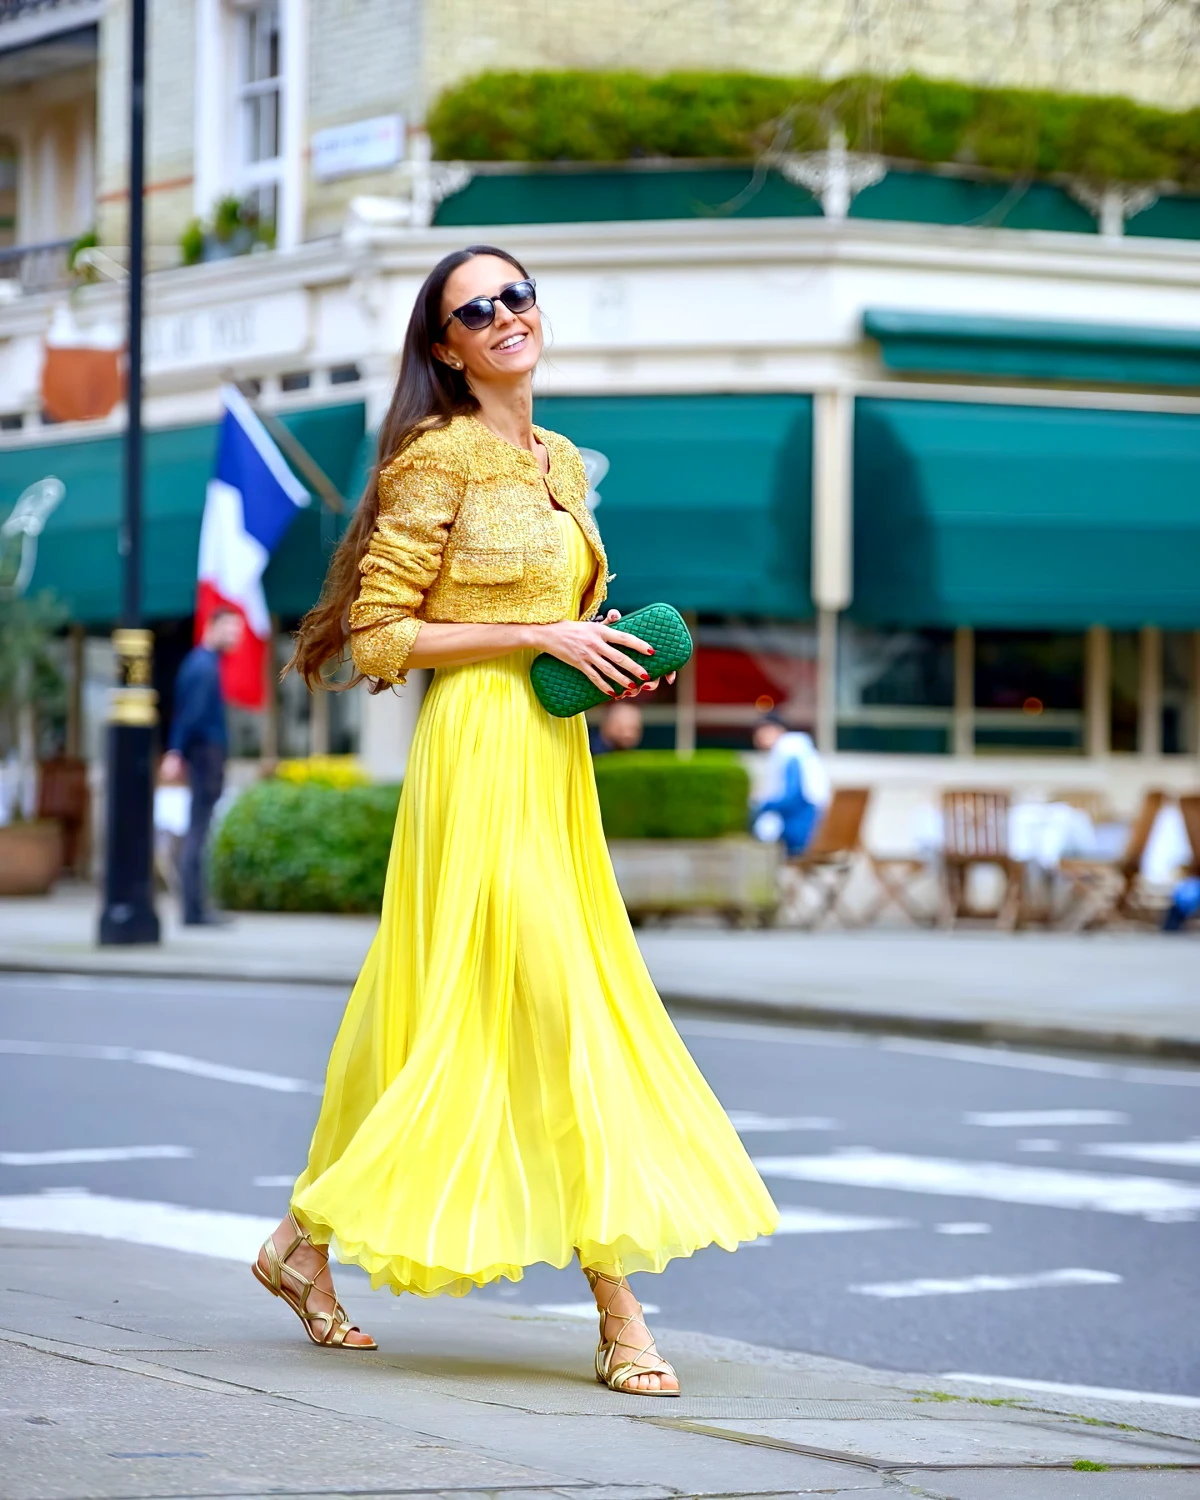 femme élégante en style bohème chic jupe jaune